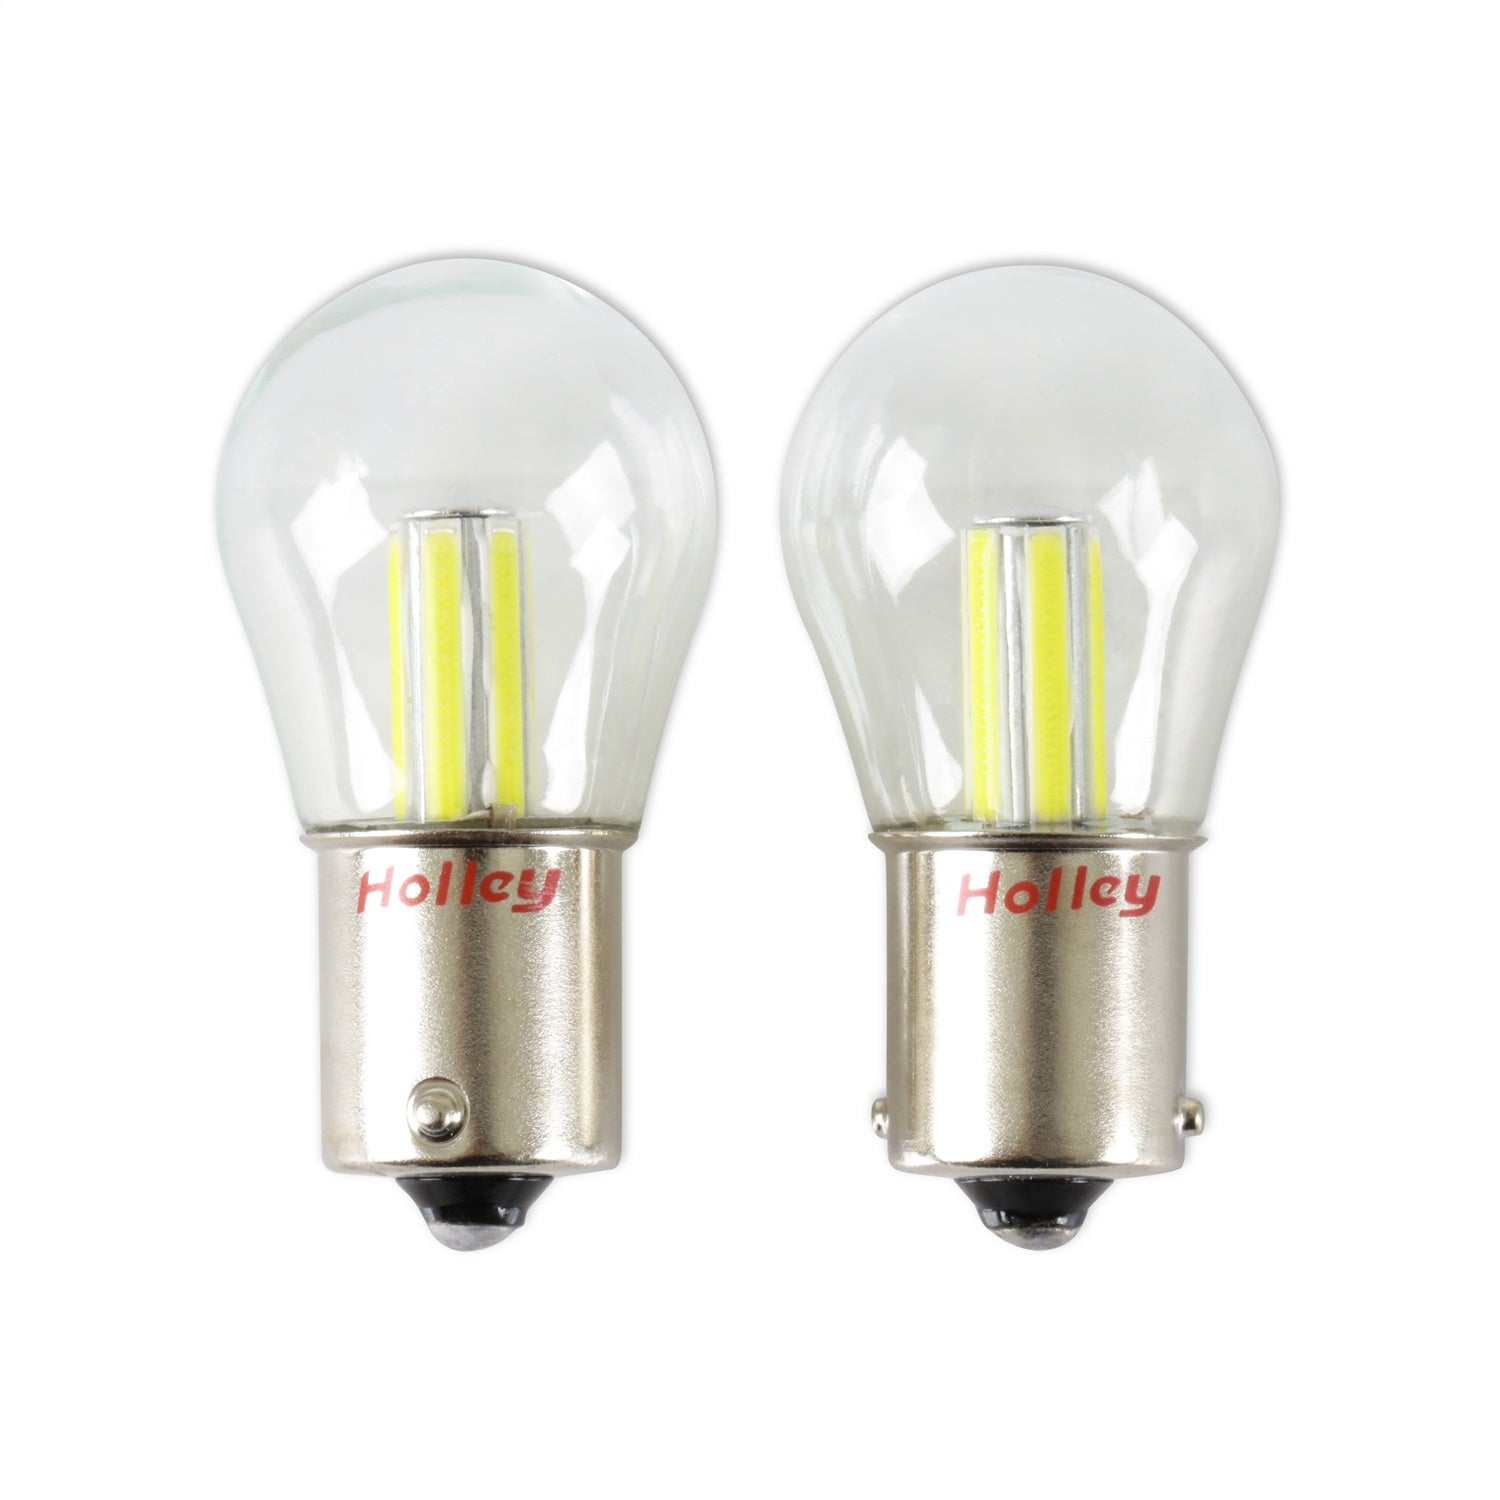 Holley RetroBright Holley Retrobright LED Bulb HLED04